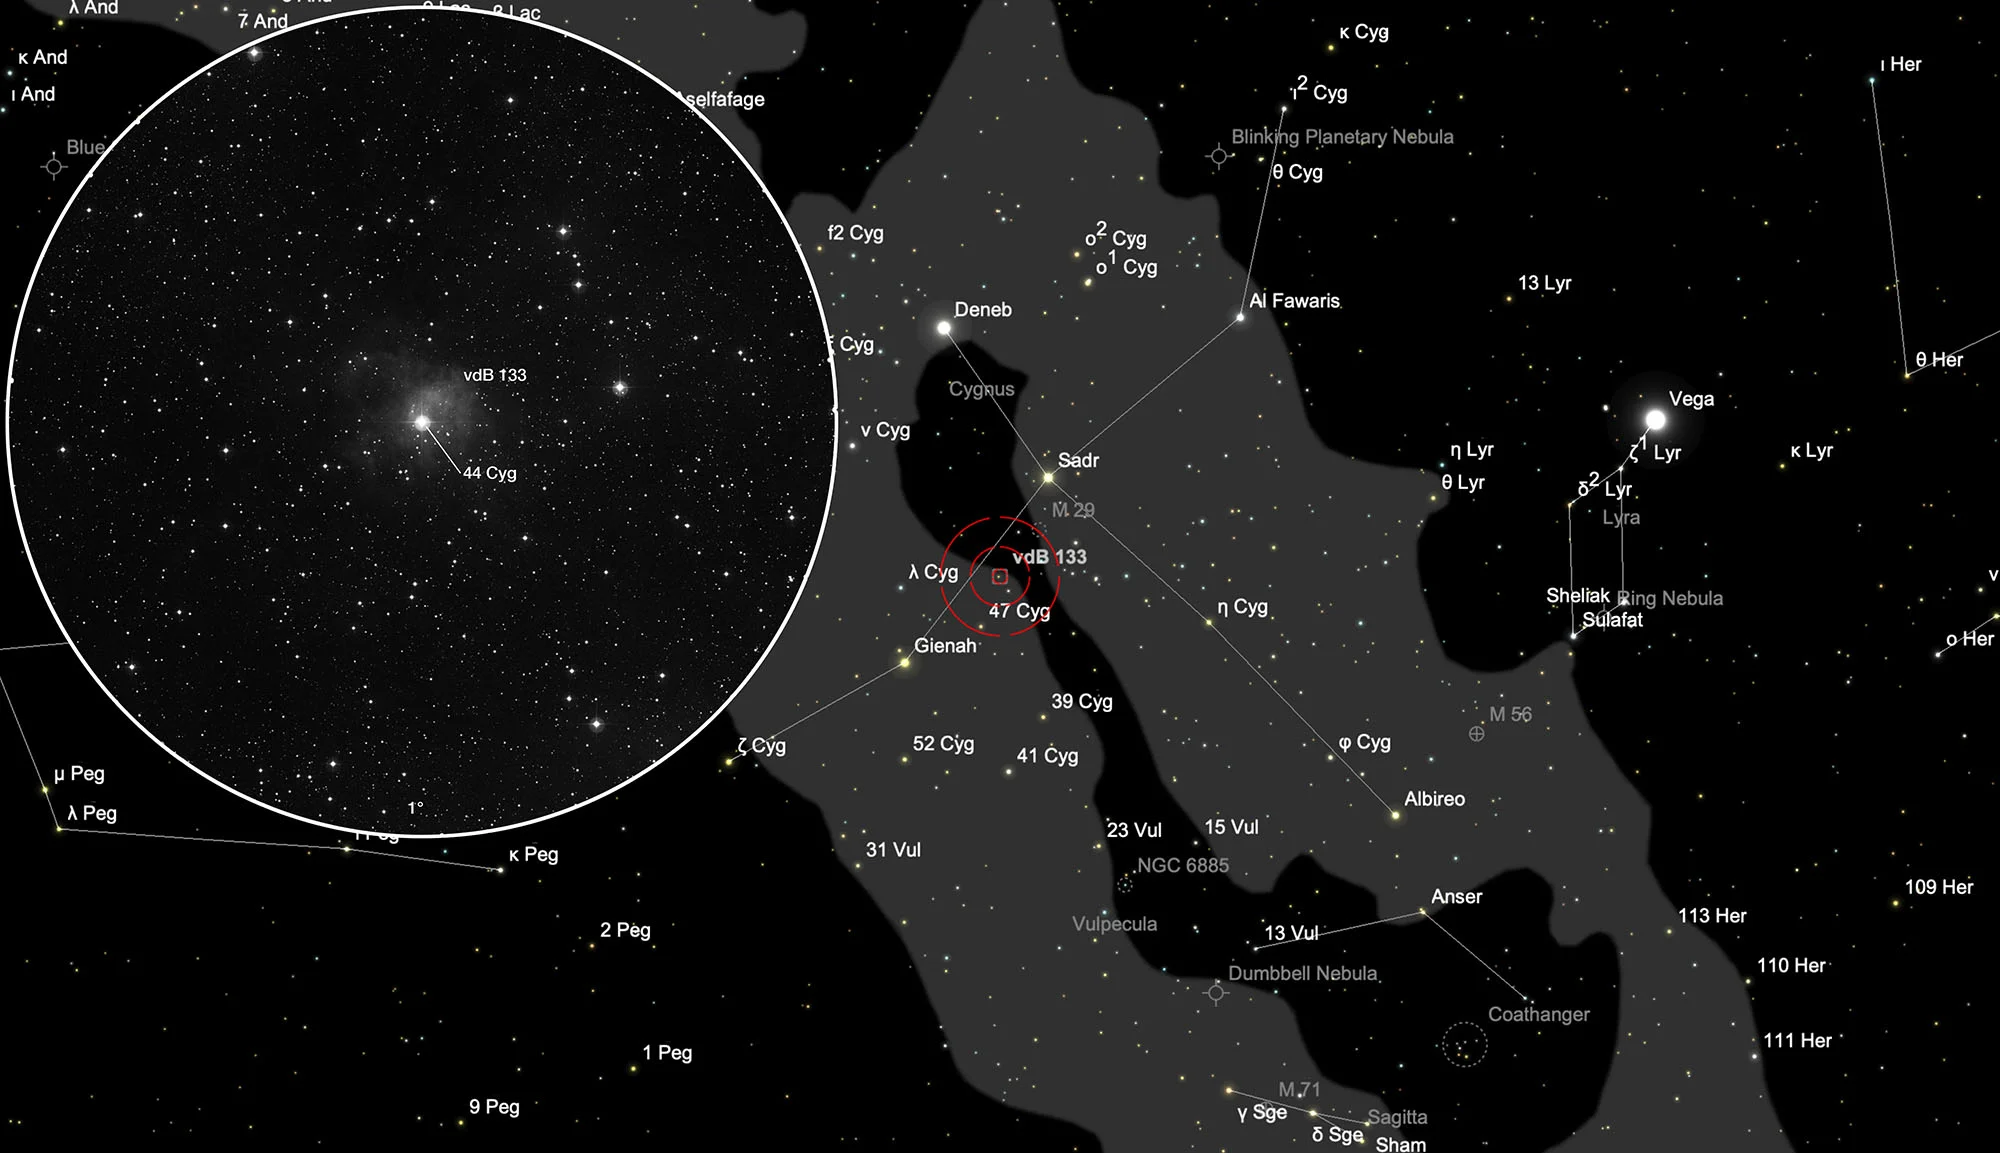 Finder Chart 44 Cygni with Reflection Nebula vdB 133